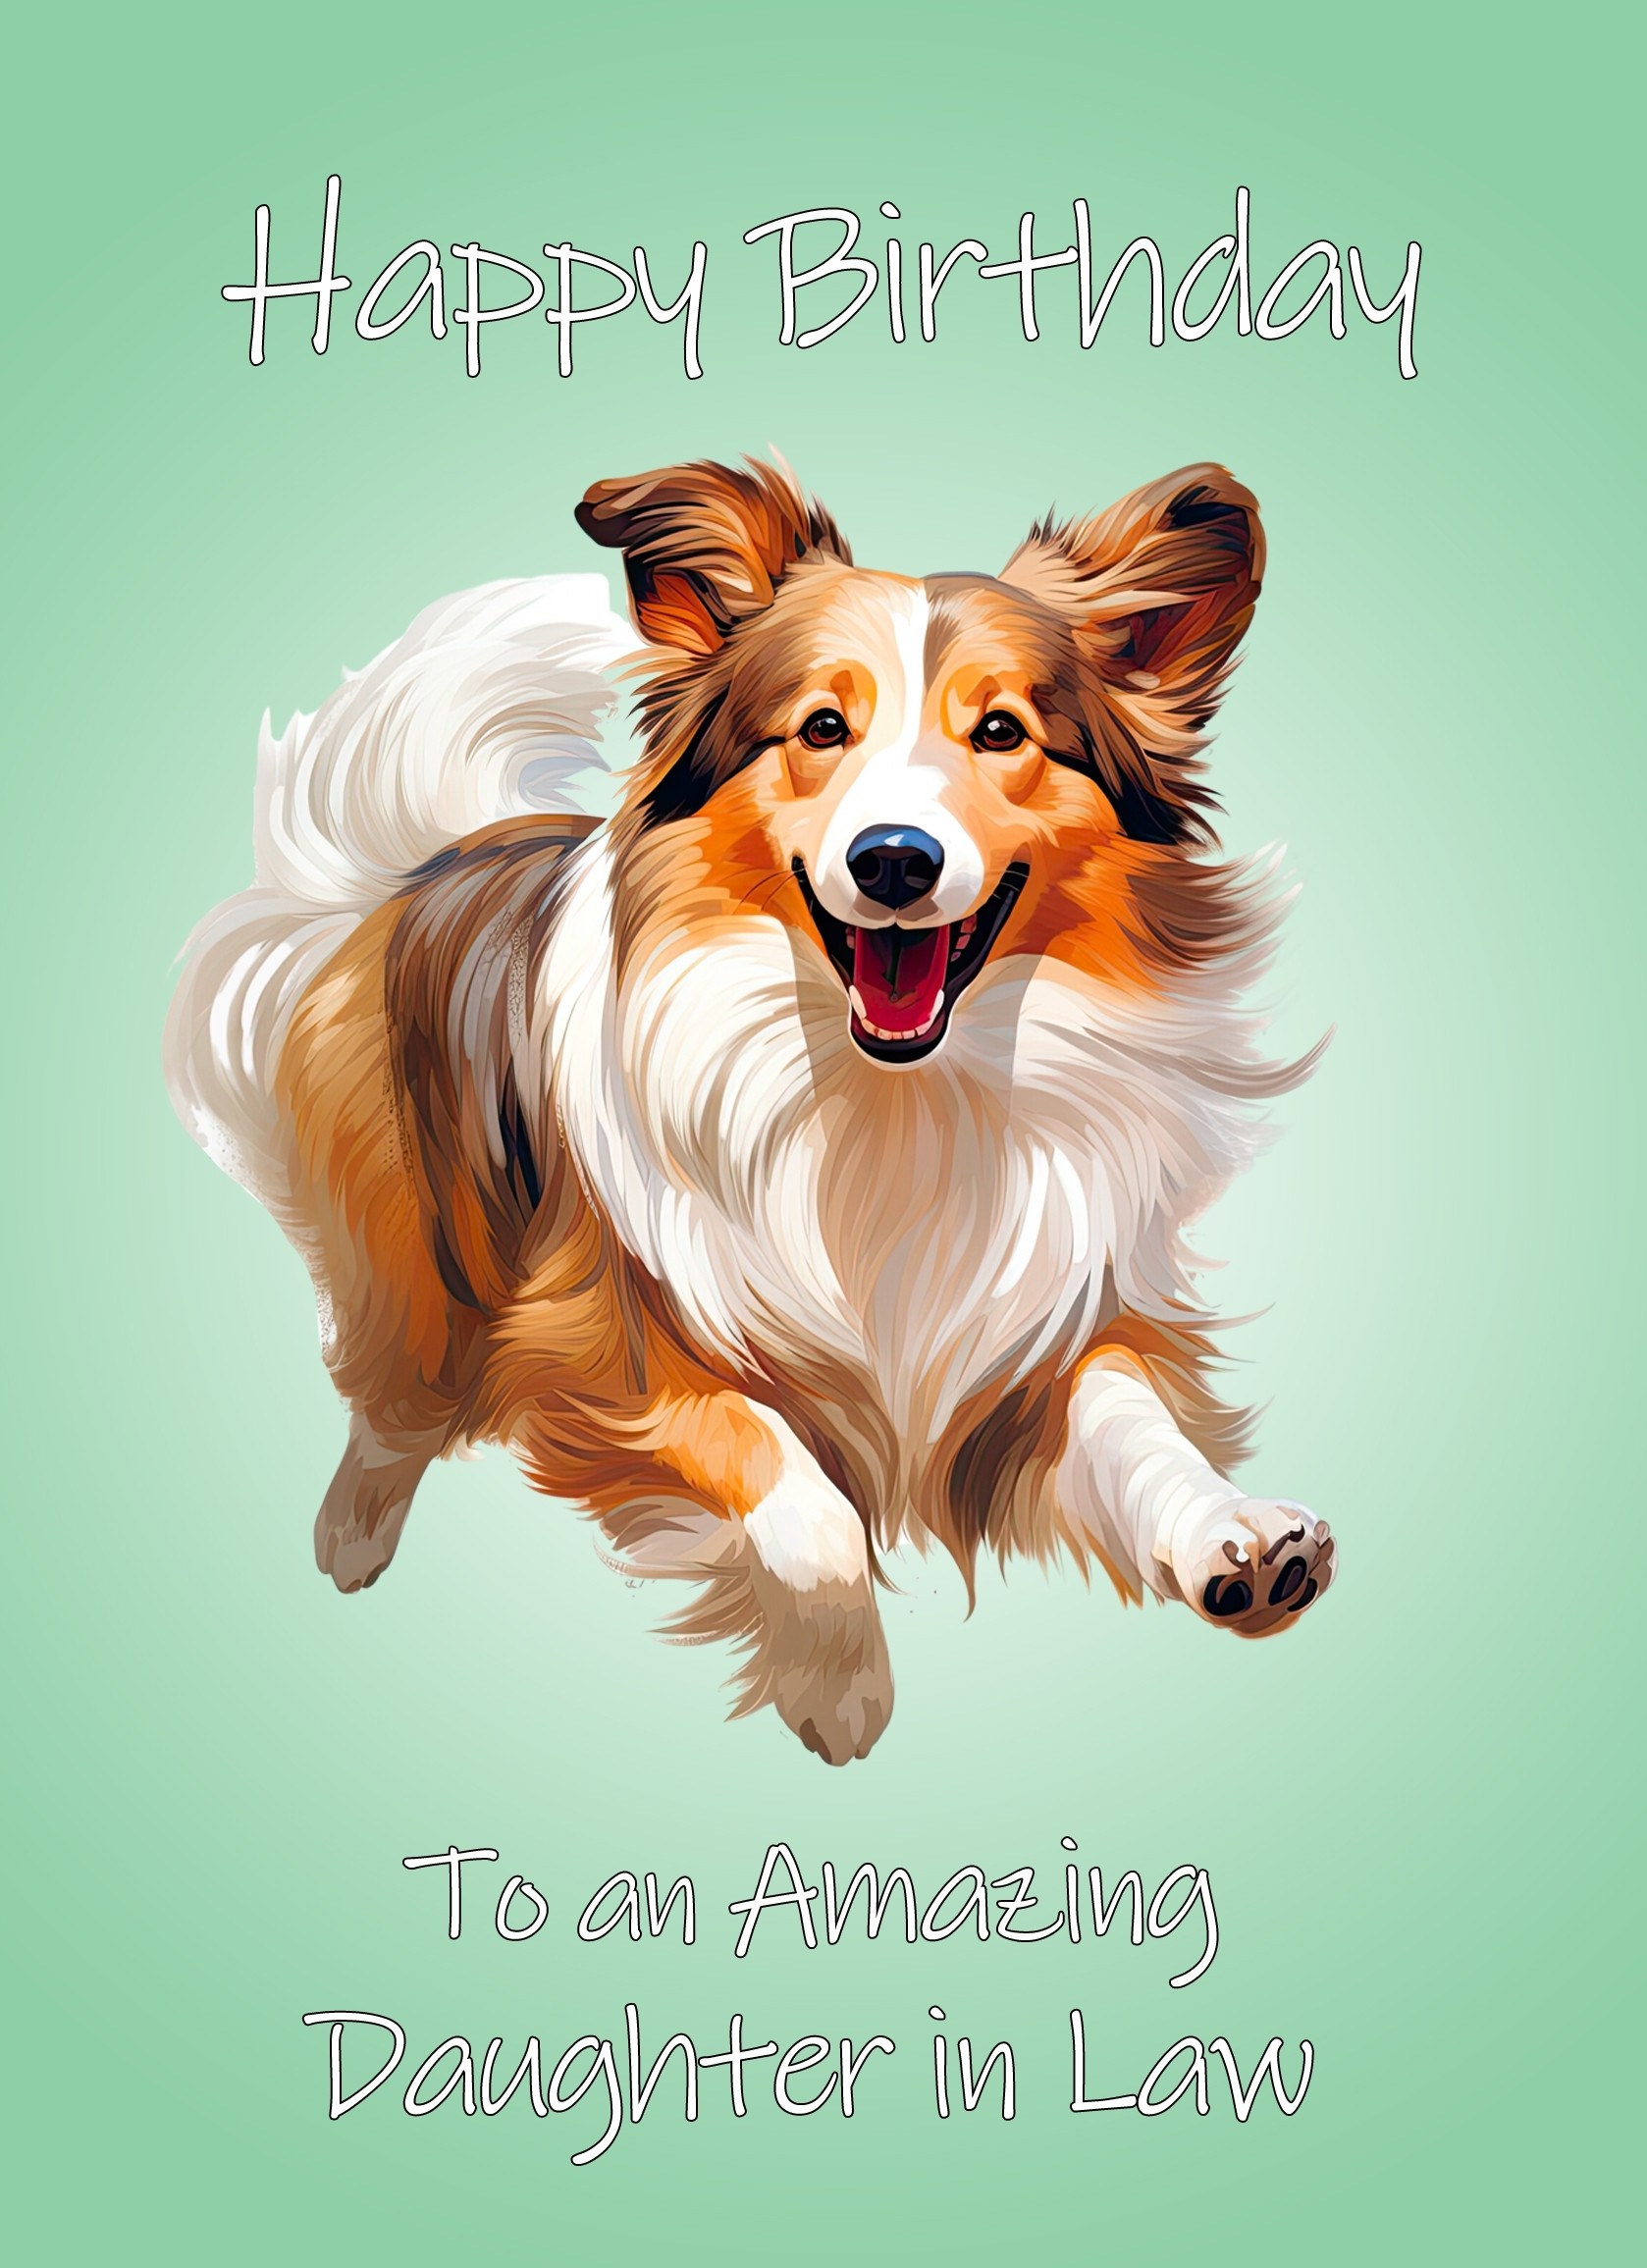 Shetland Sheepdog Dog Birthday Card For Daughter in Law